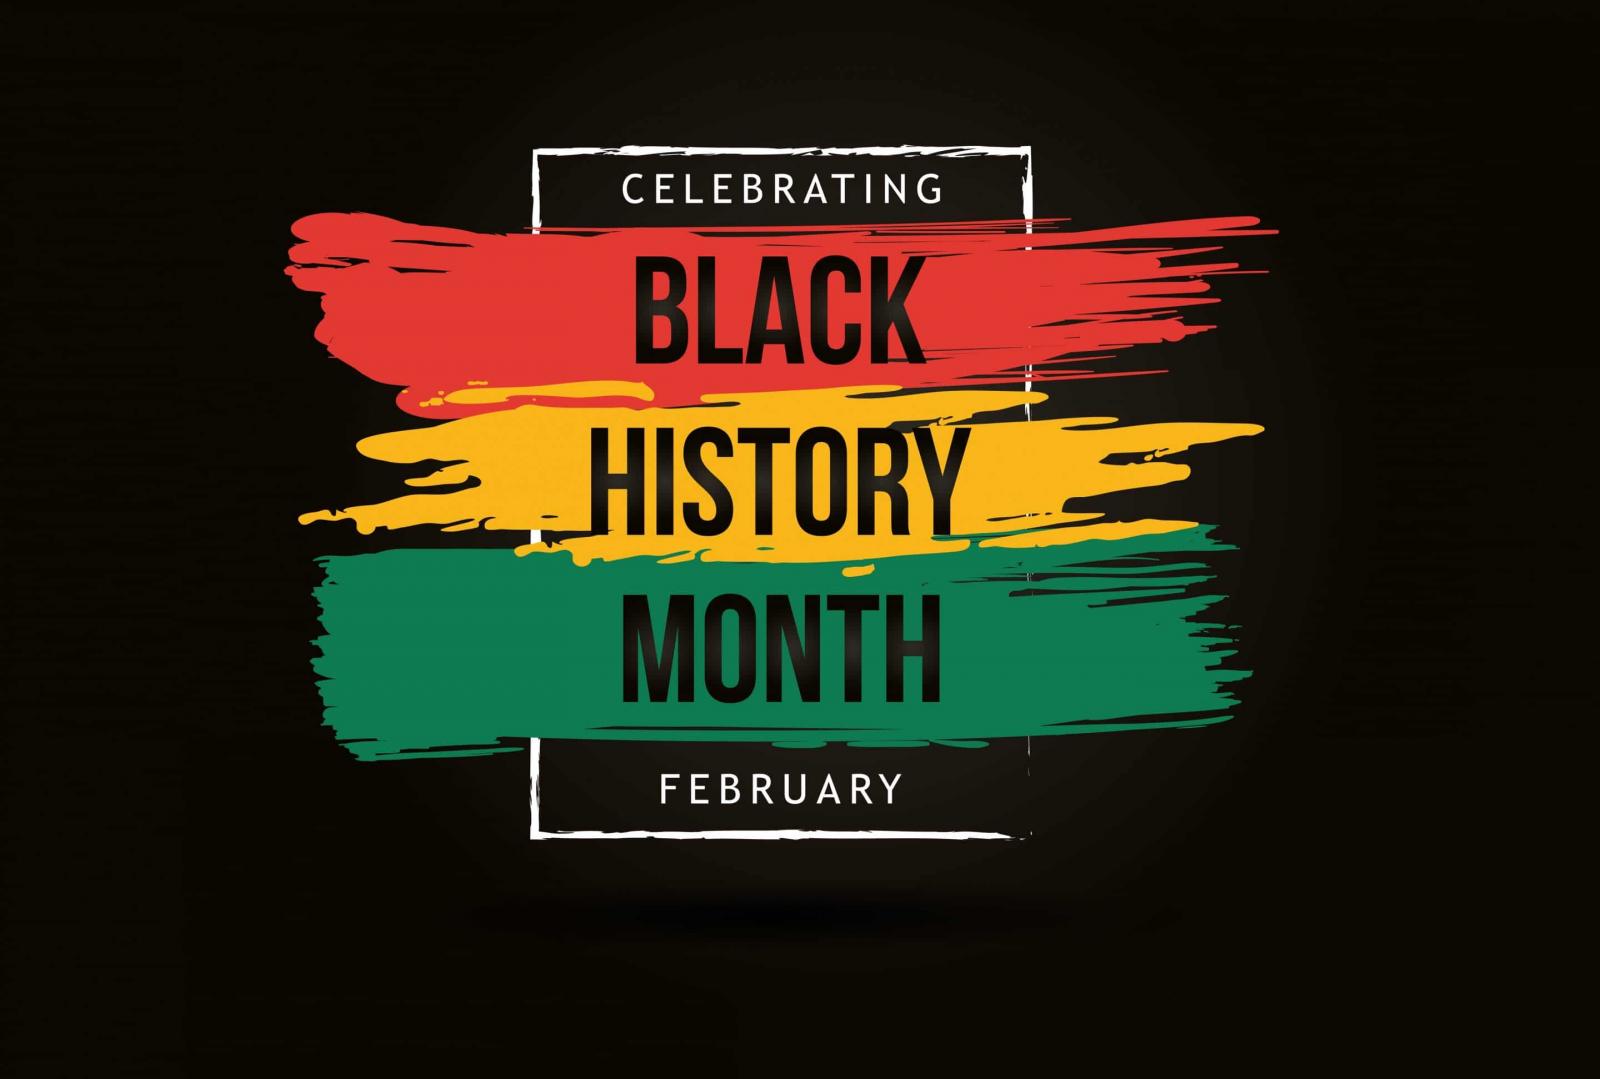 Celebrating Black History Month in February